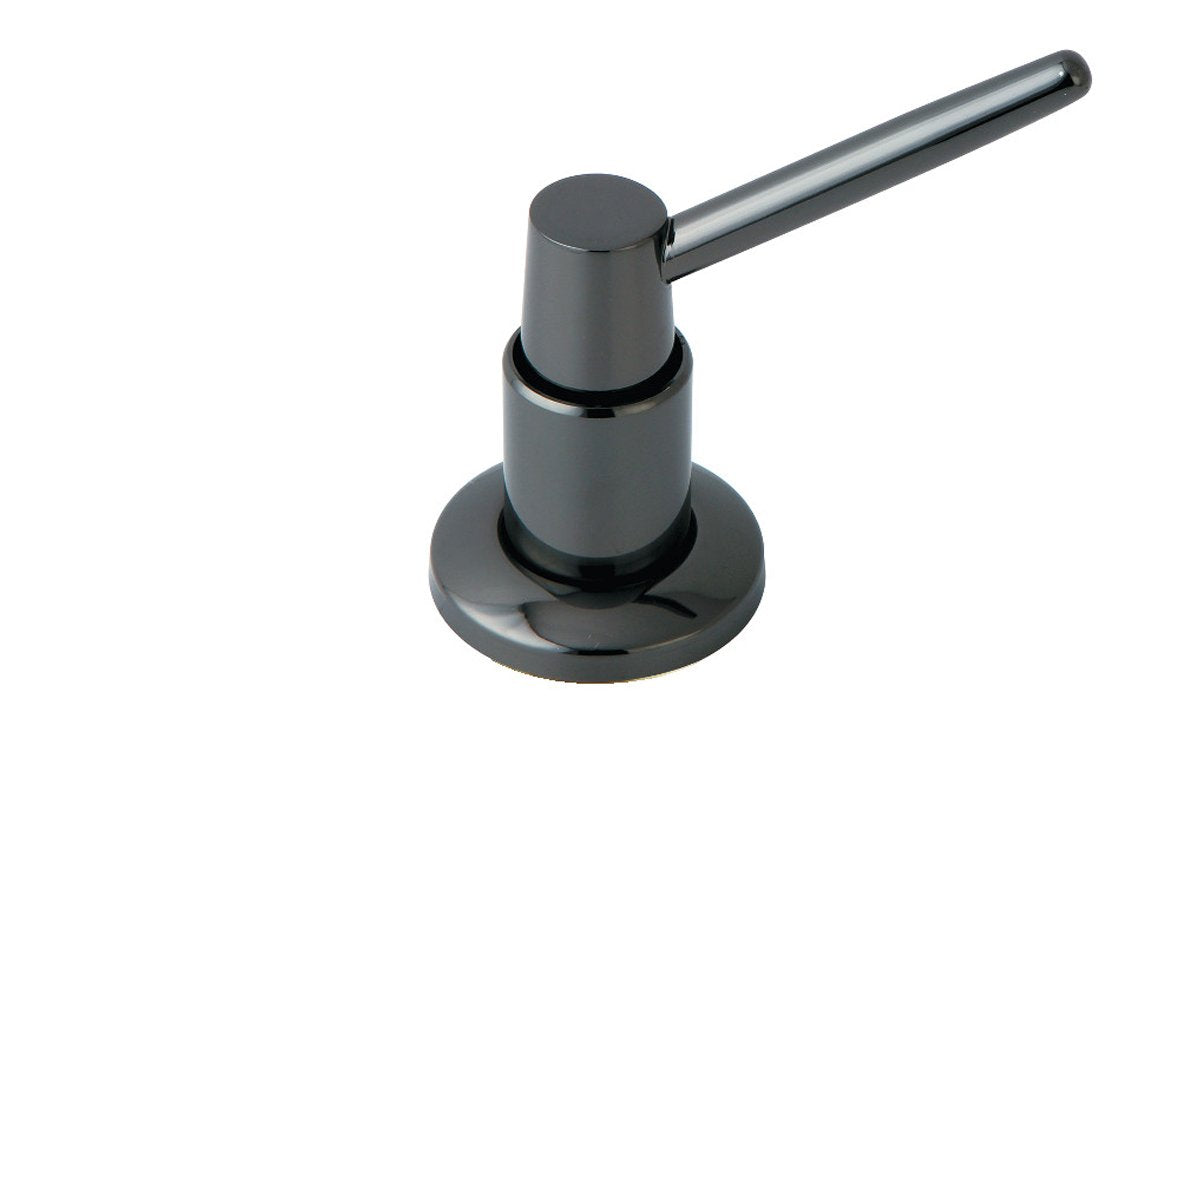 Kingston Brass Water Onyx Soap Dispenser in Black Stainless Steel